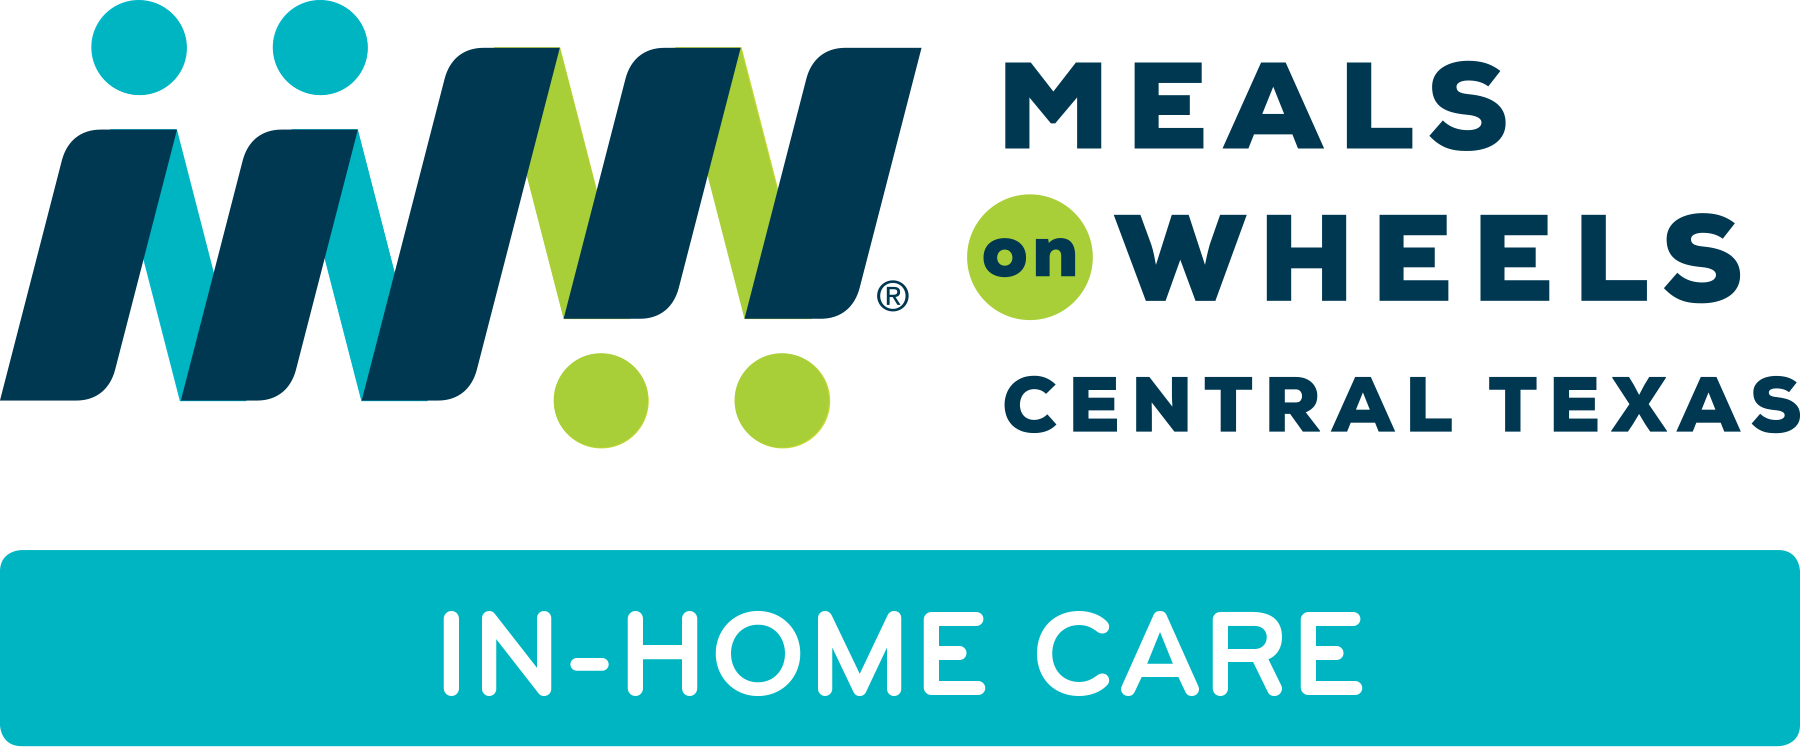 In-Home Care logo